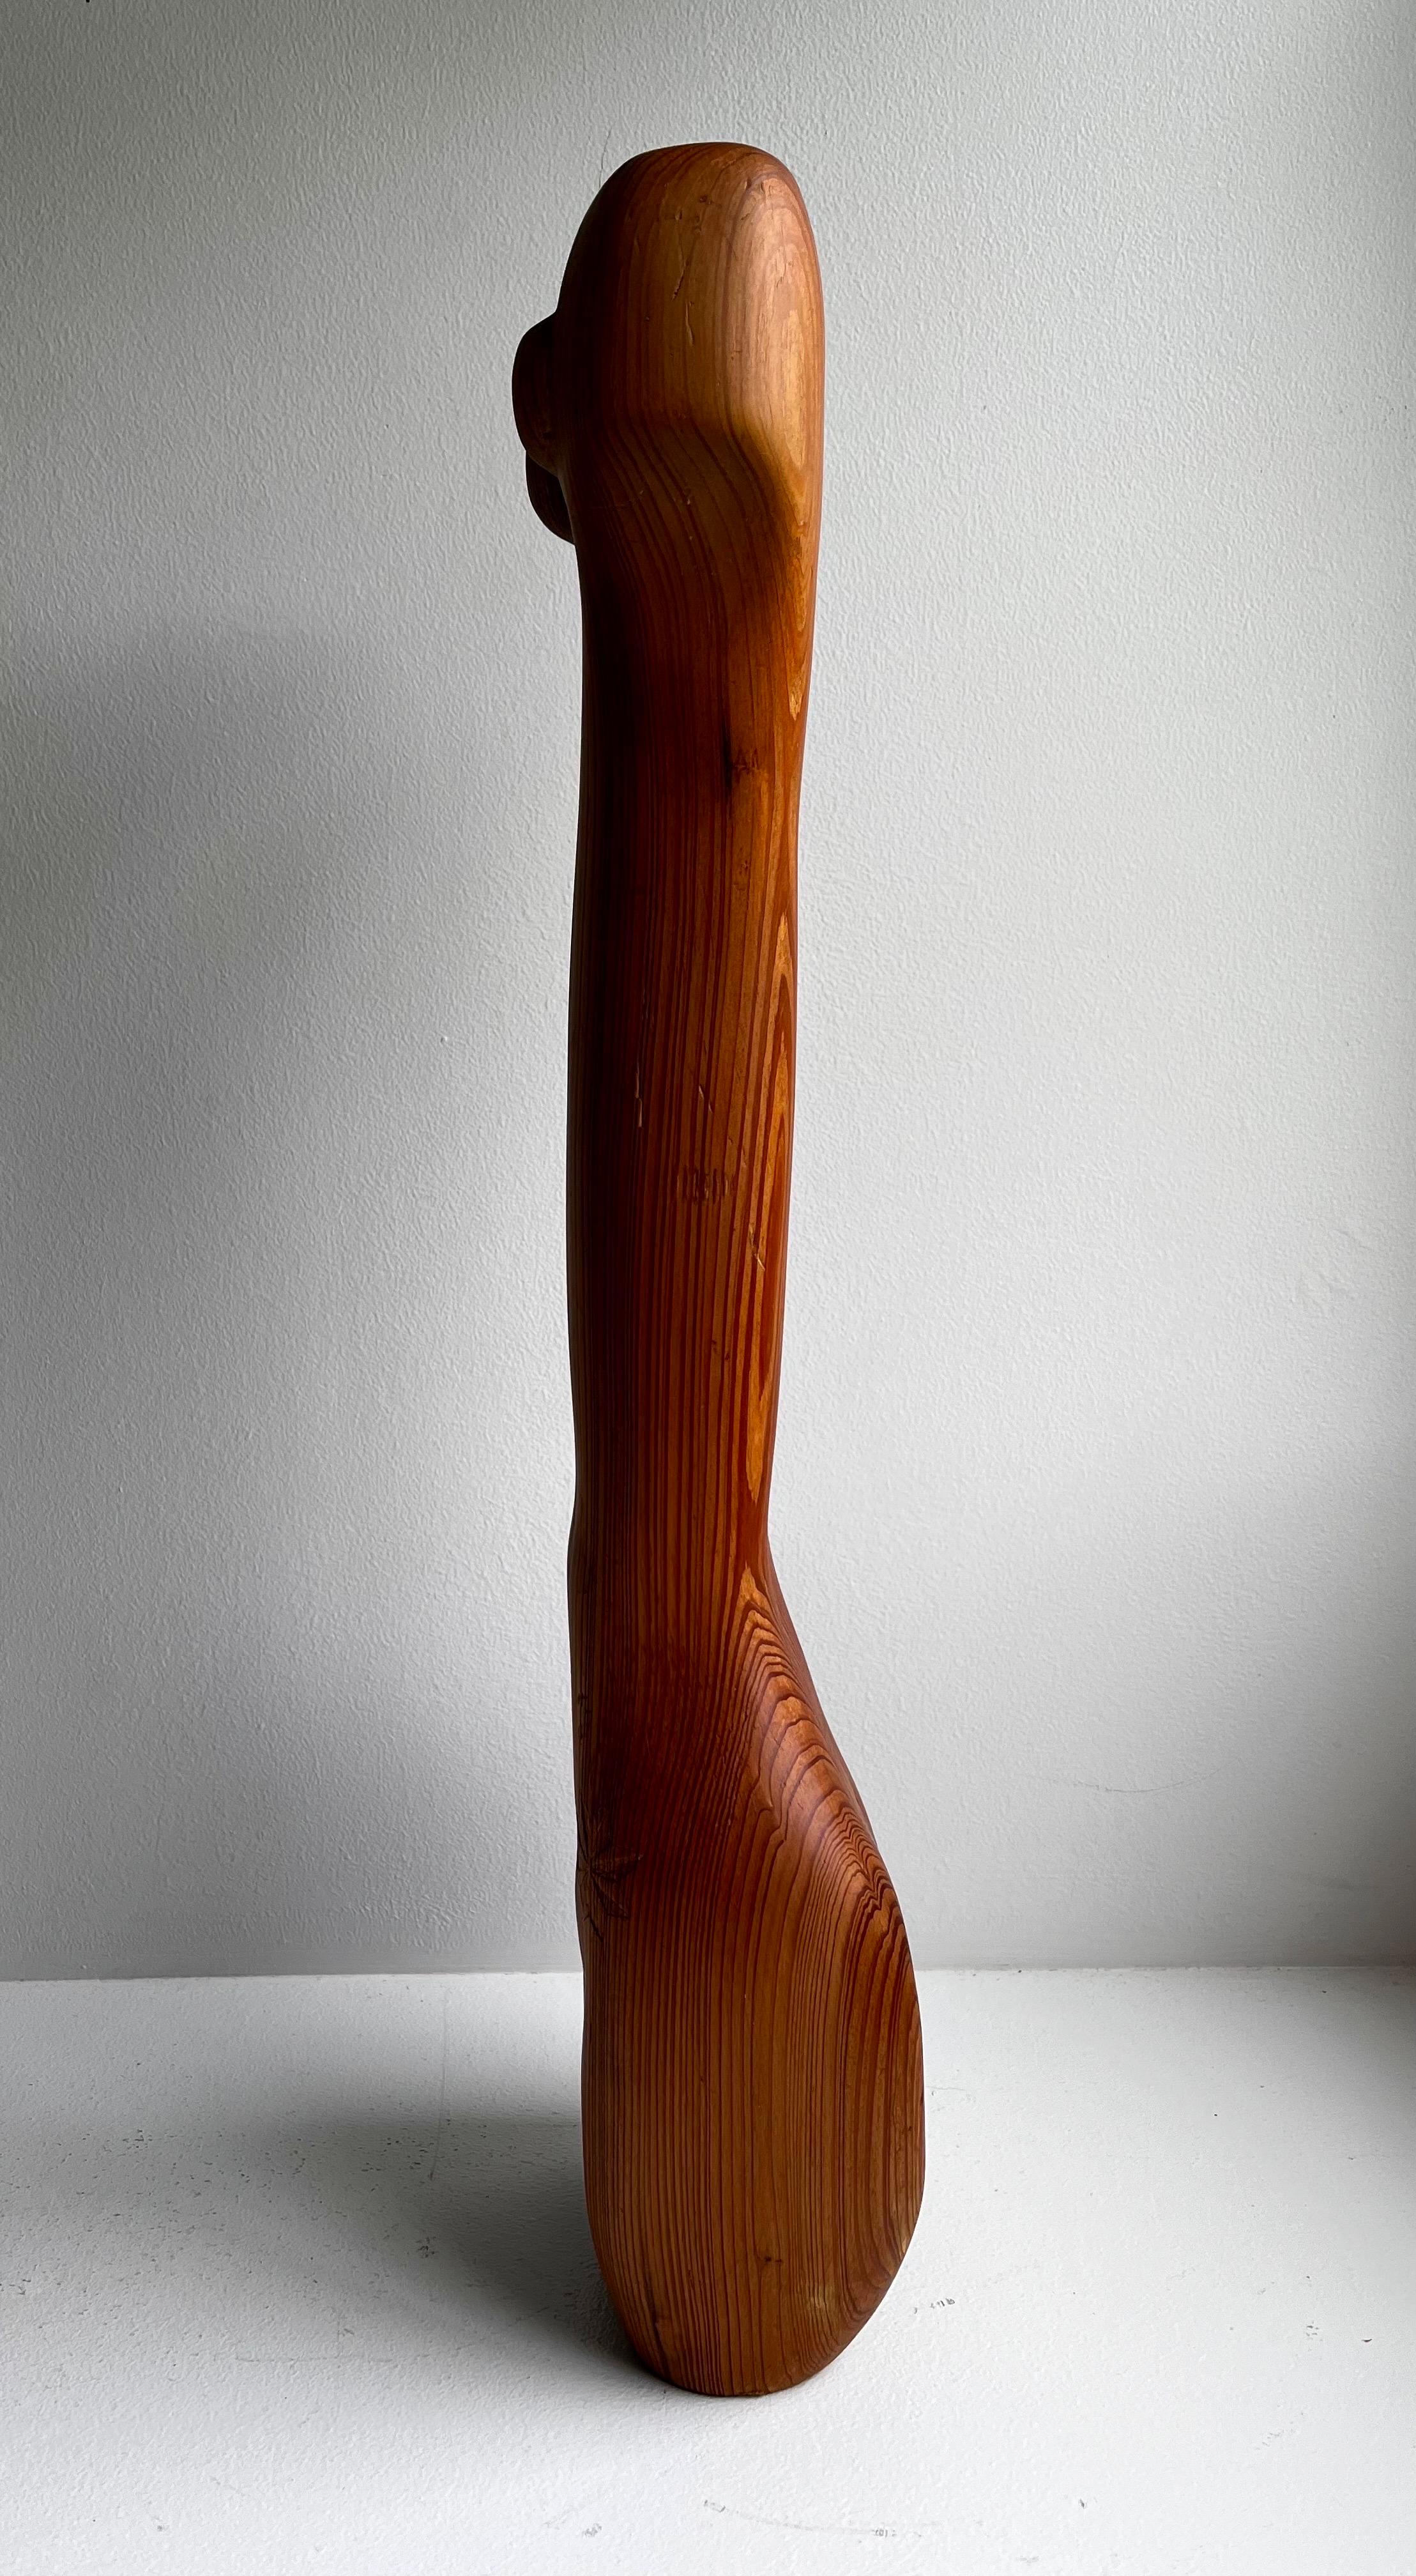 Primitive Modernist Wood Sculpture 
Female Nude
Unsigned - Artist Unknown
Vertical Grain Douglas-Fir
Geometric Carving near 